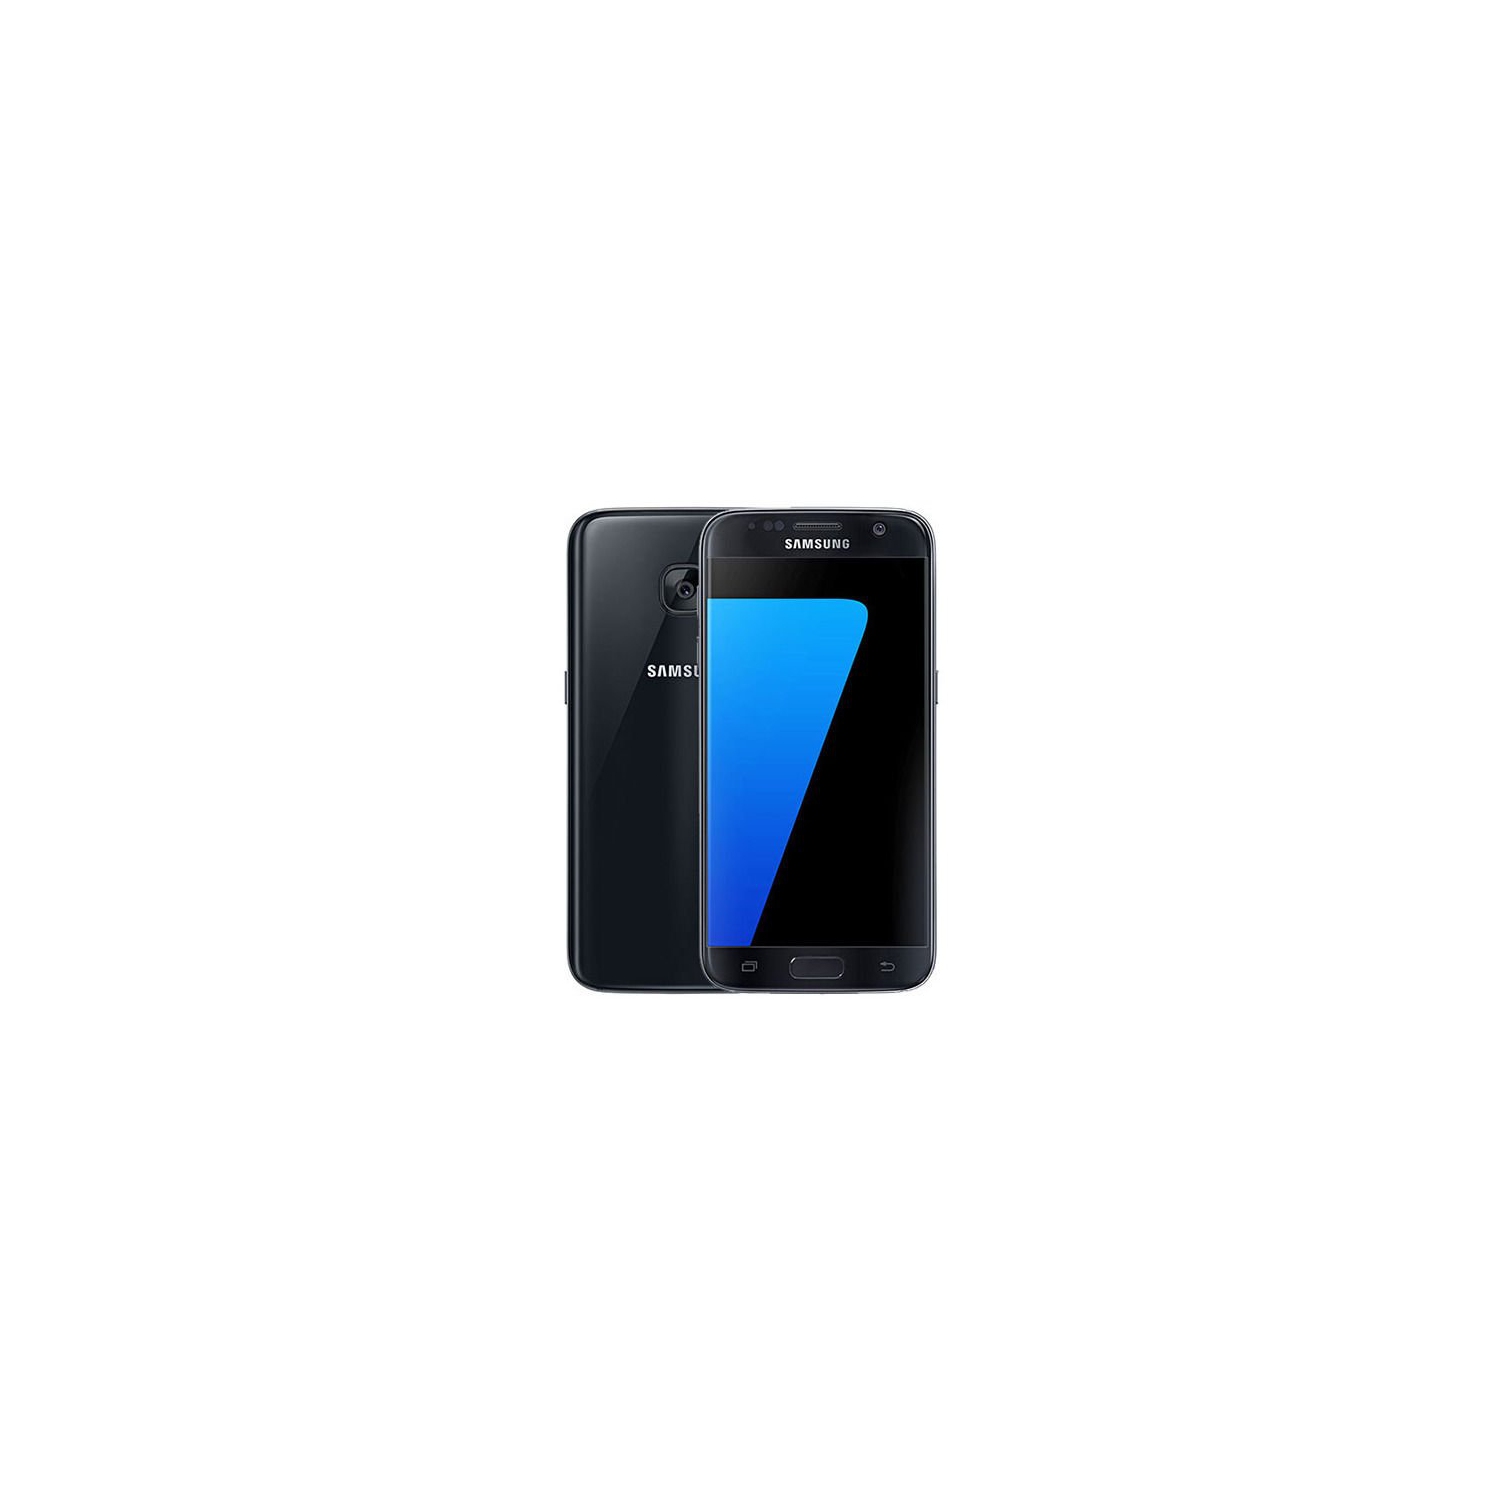 Samsung Galaxy S7 32GB Smartphone - Black Onyx - Unlocked - Certified Pre-Owned